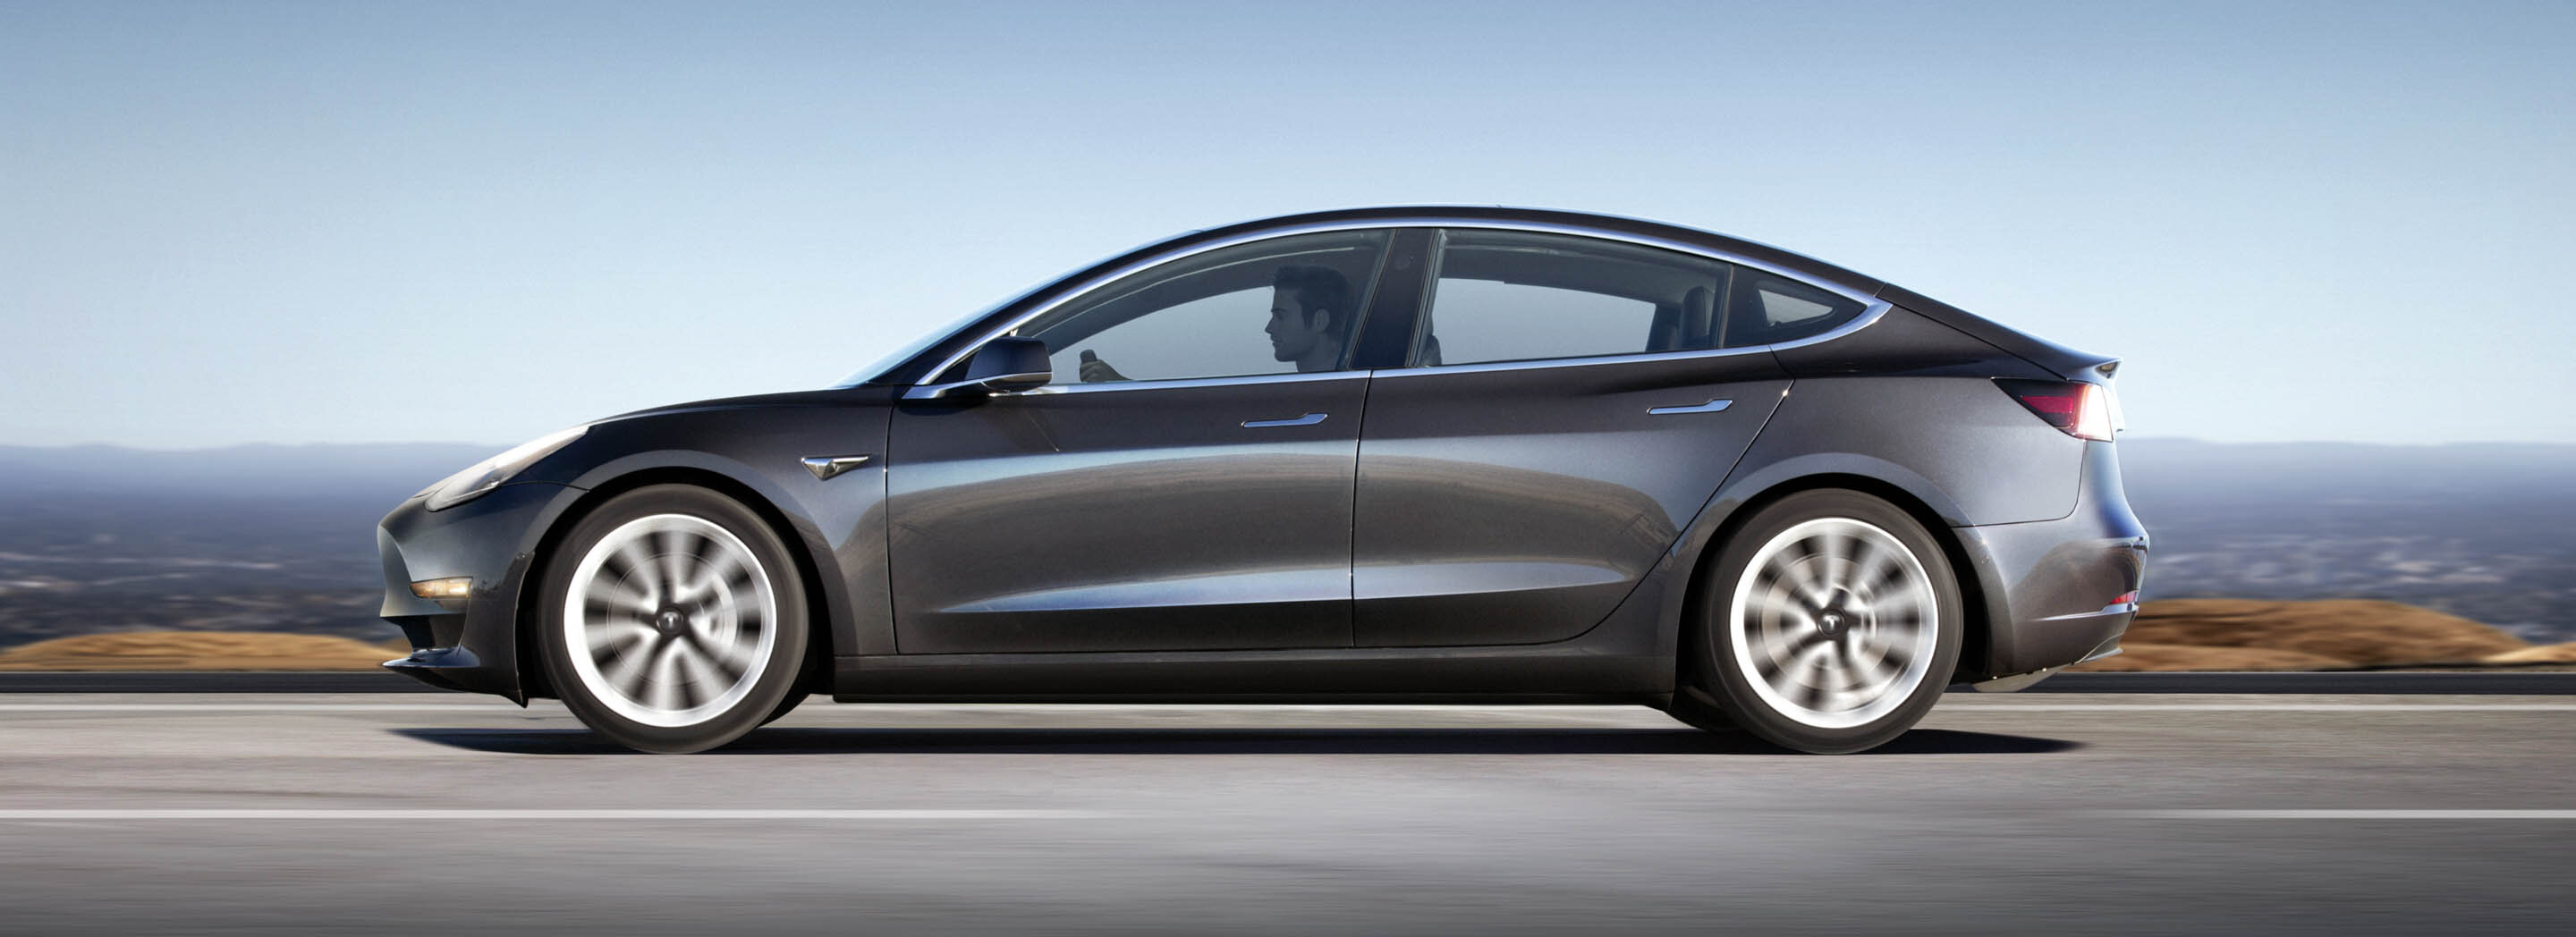 Tesla Model 3: Μέτρια βαθμολογία λόγω ανεπαρκούς αλληλεπίδρασης με τον οδηγό, σε σχετικές δοκιμές